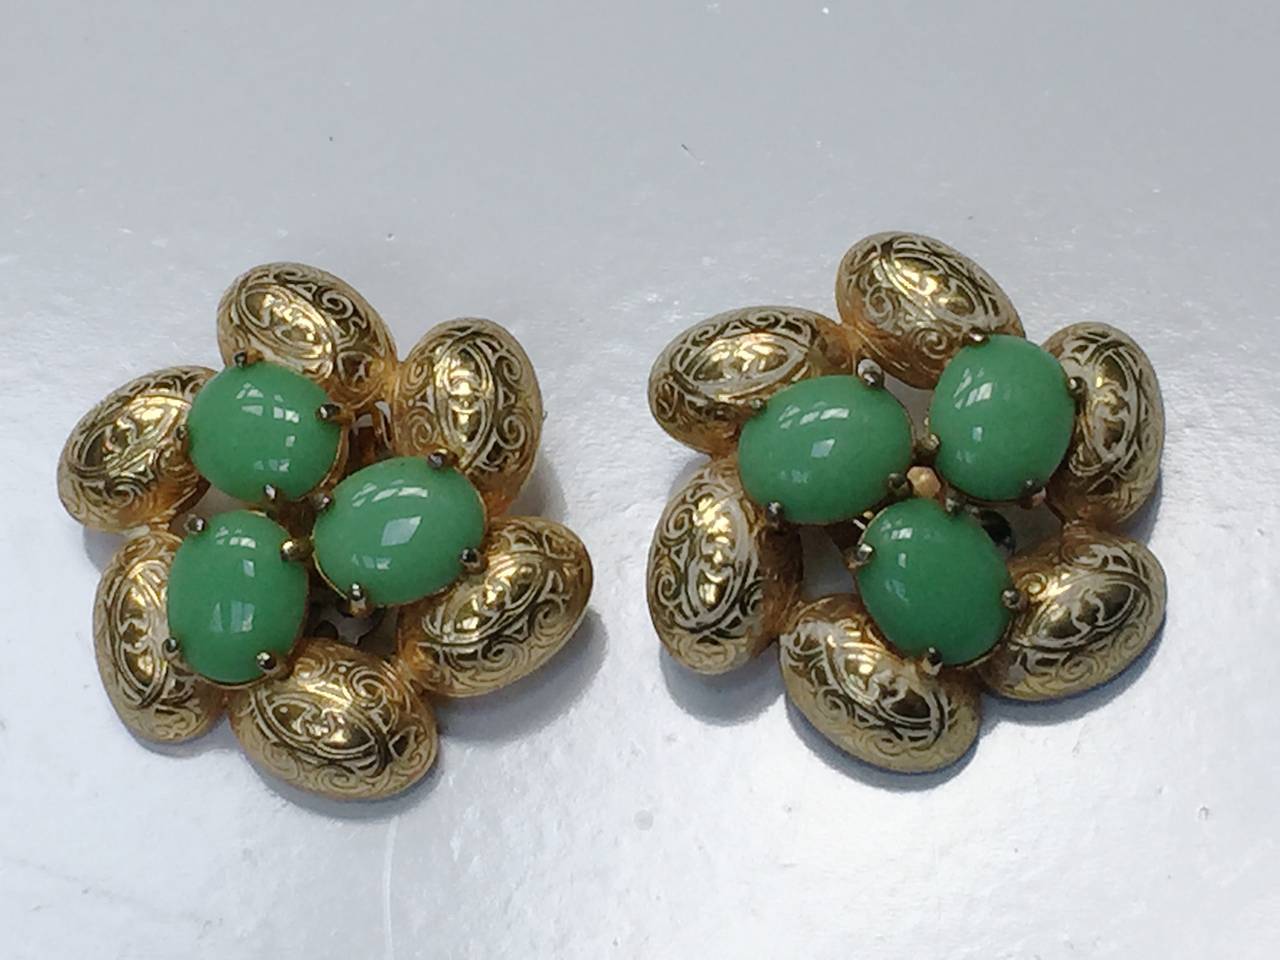 Elsa Schiaparelli 1960s gold with green glass center pieces clip earrings.
1.1/2